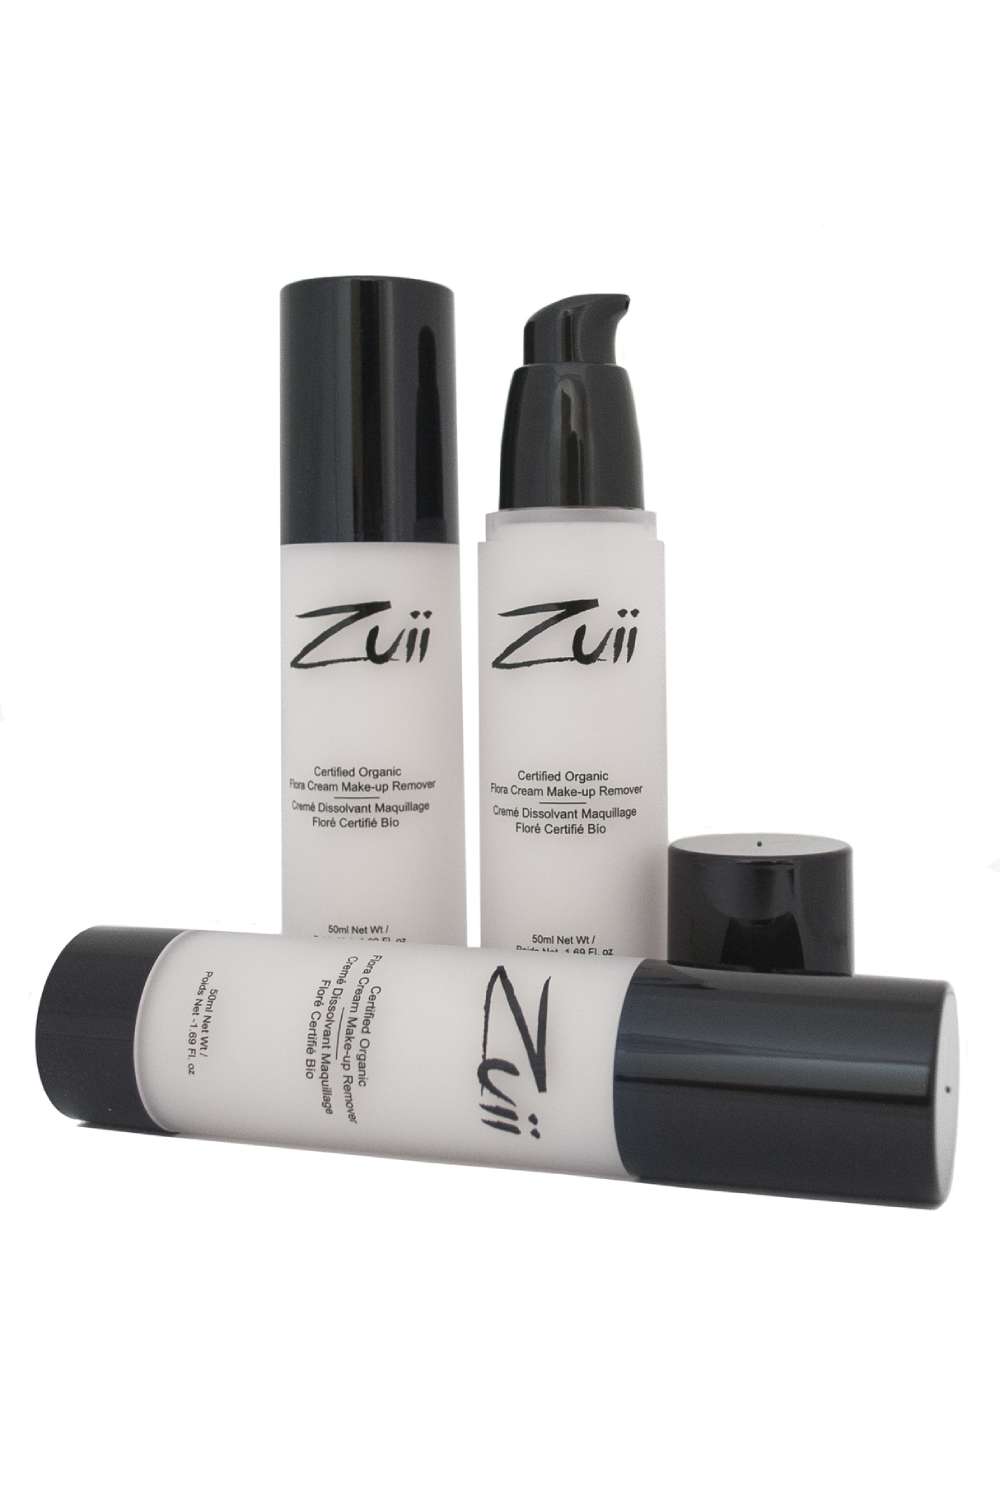 Zuii Organic Certified Makeup Remover